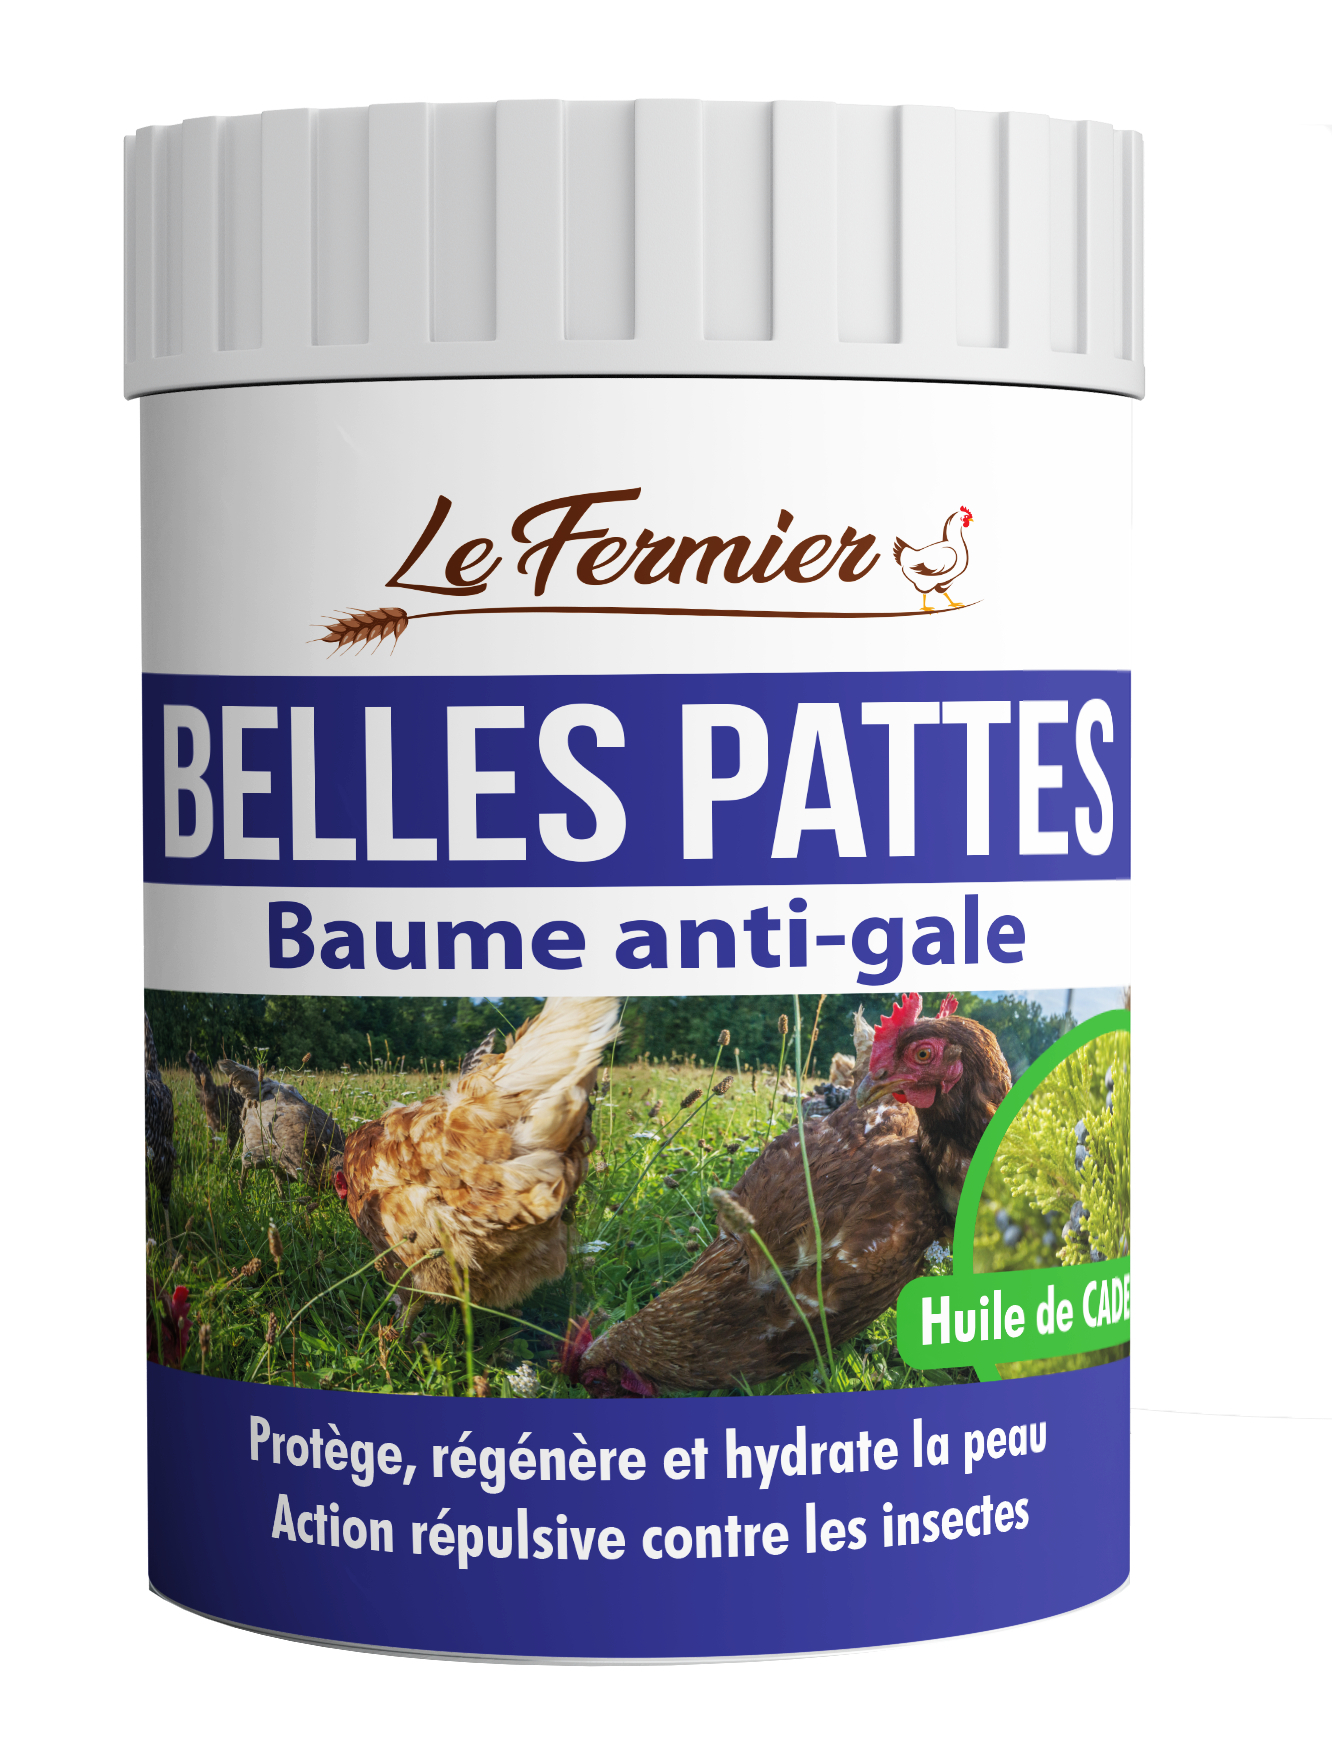 Bálsamo para galinhas Anti-Sarna Belle Pattes da marca Le Fermier